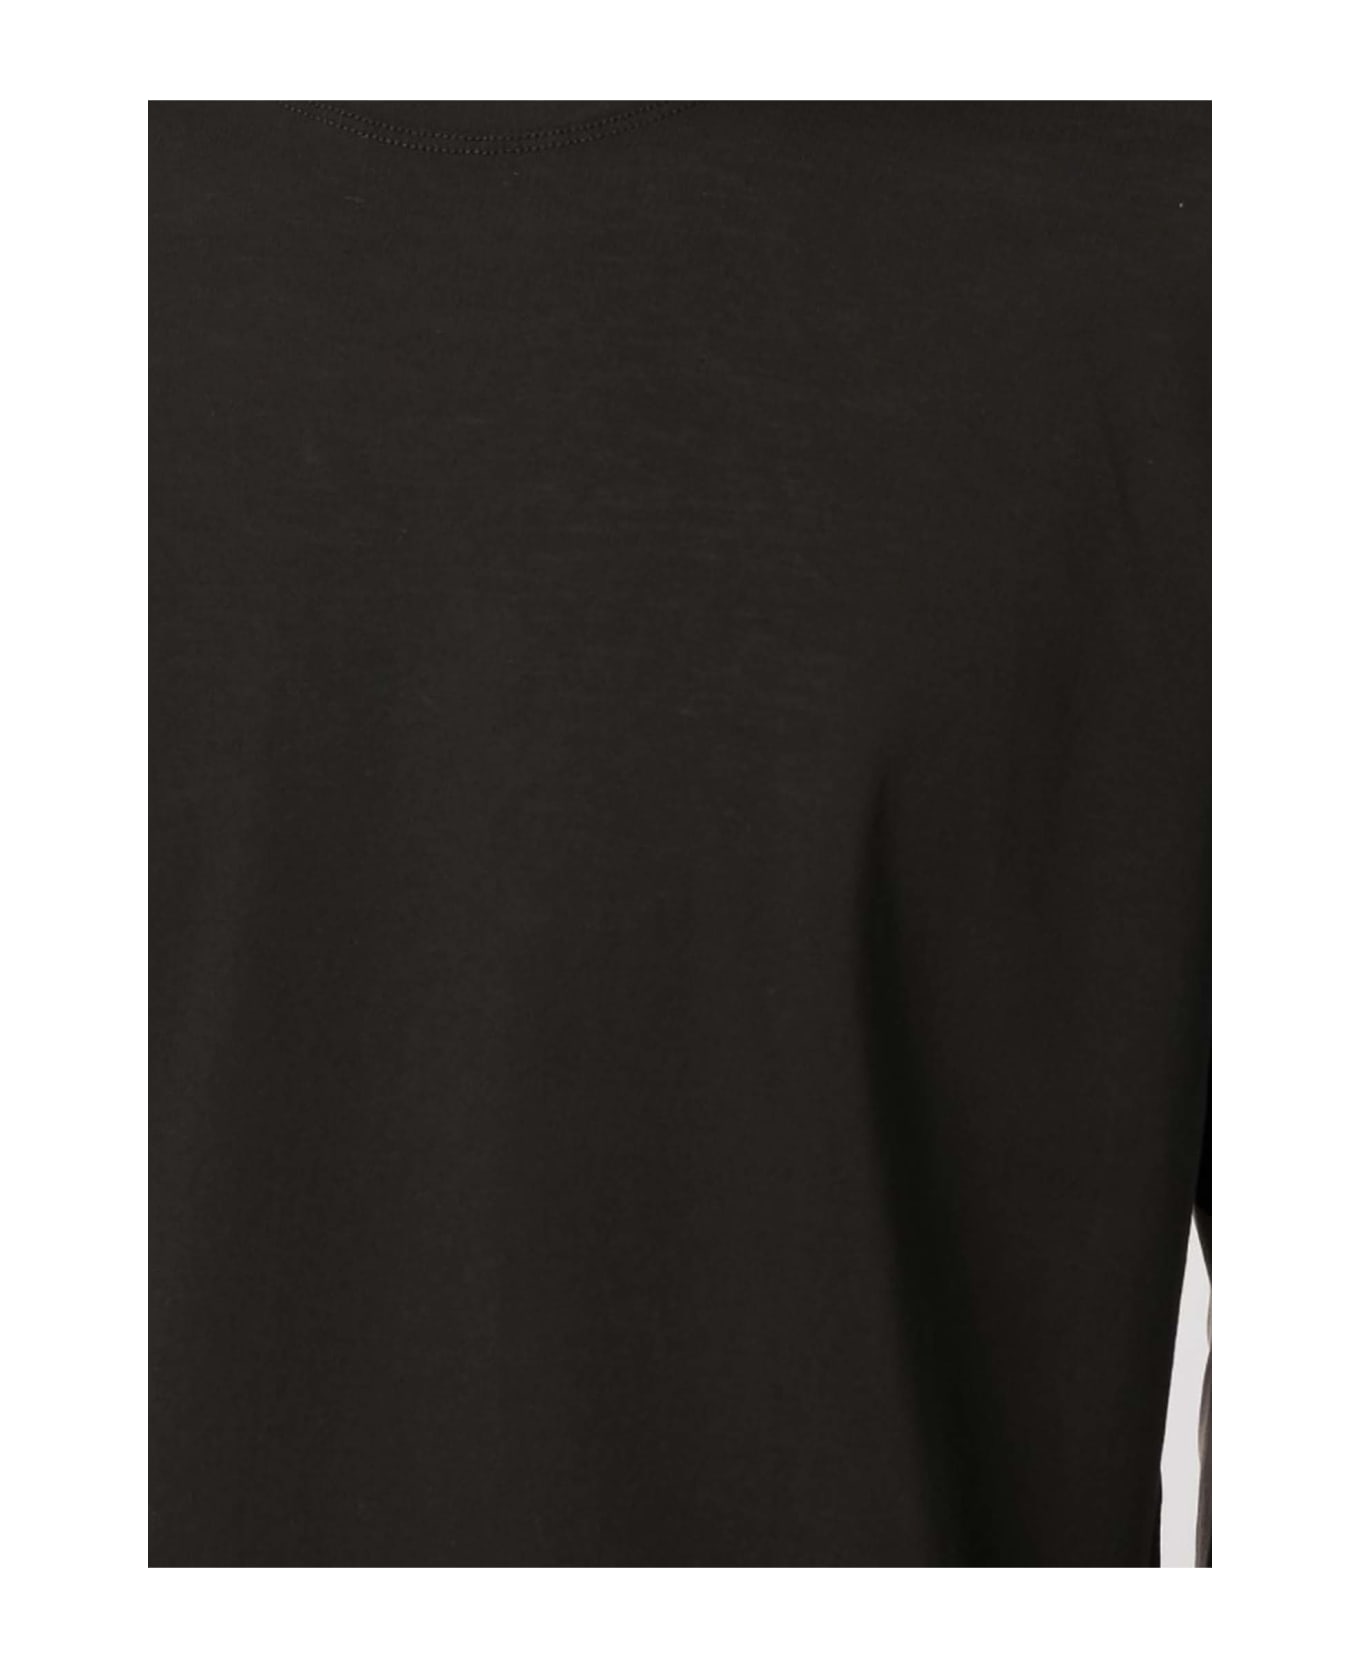 Kired Black Jersey Cotton T-shirt - Black シャツ